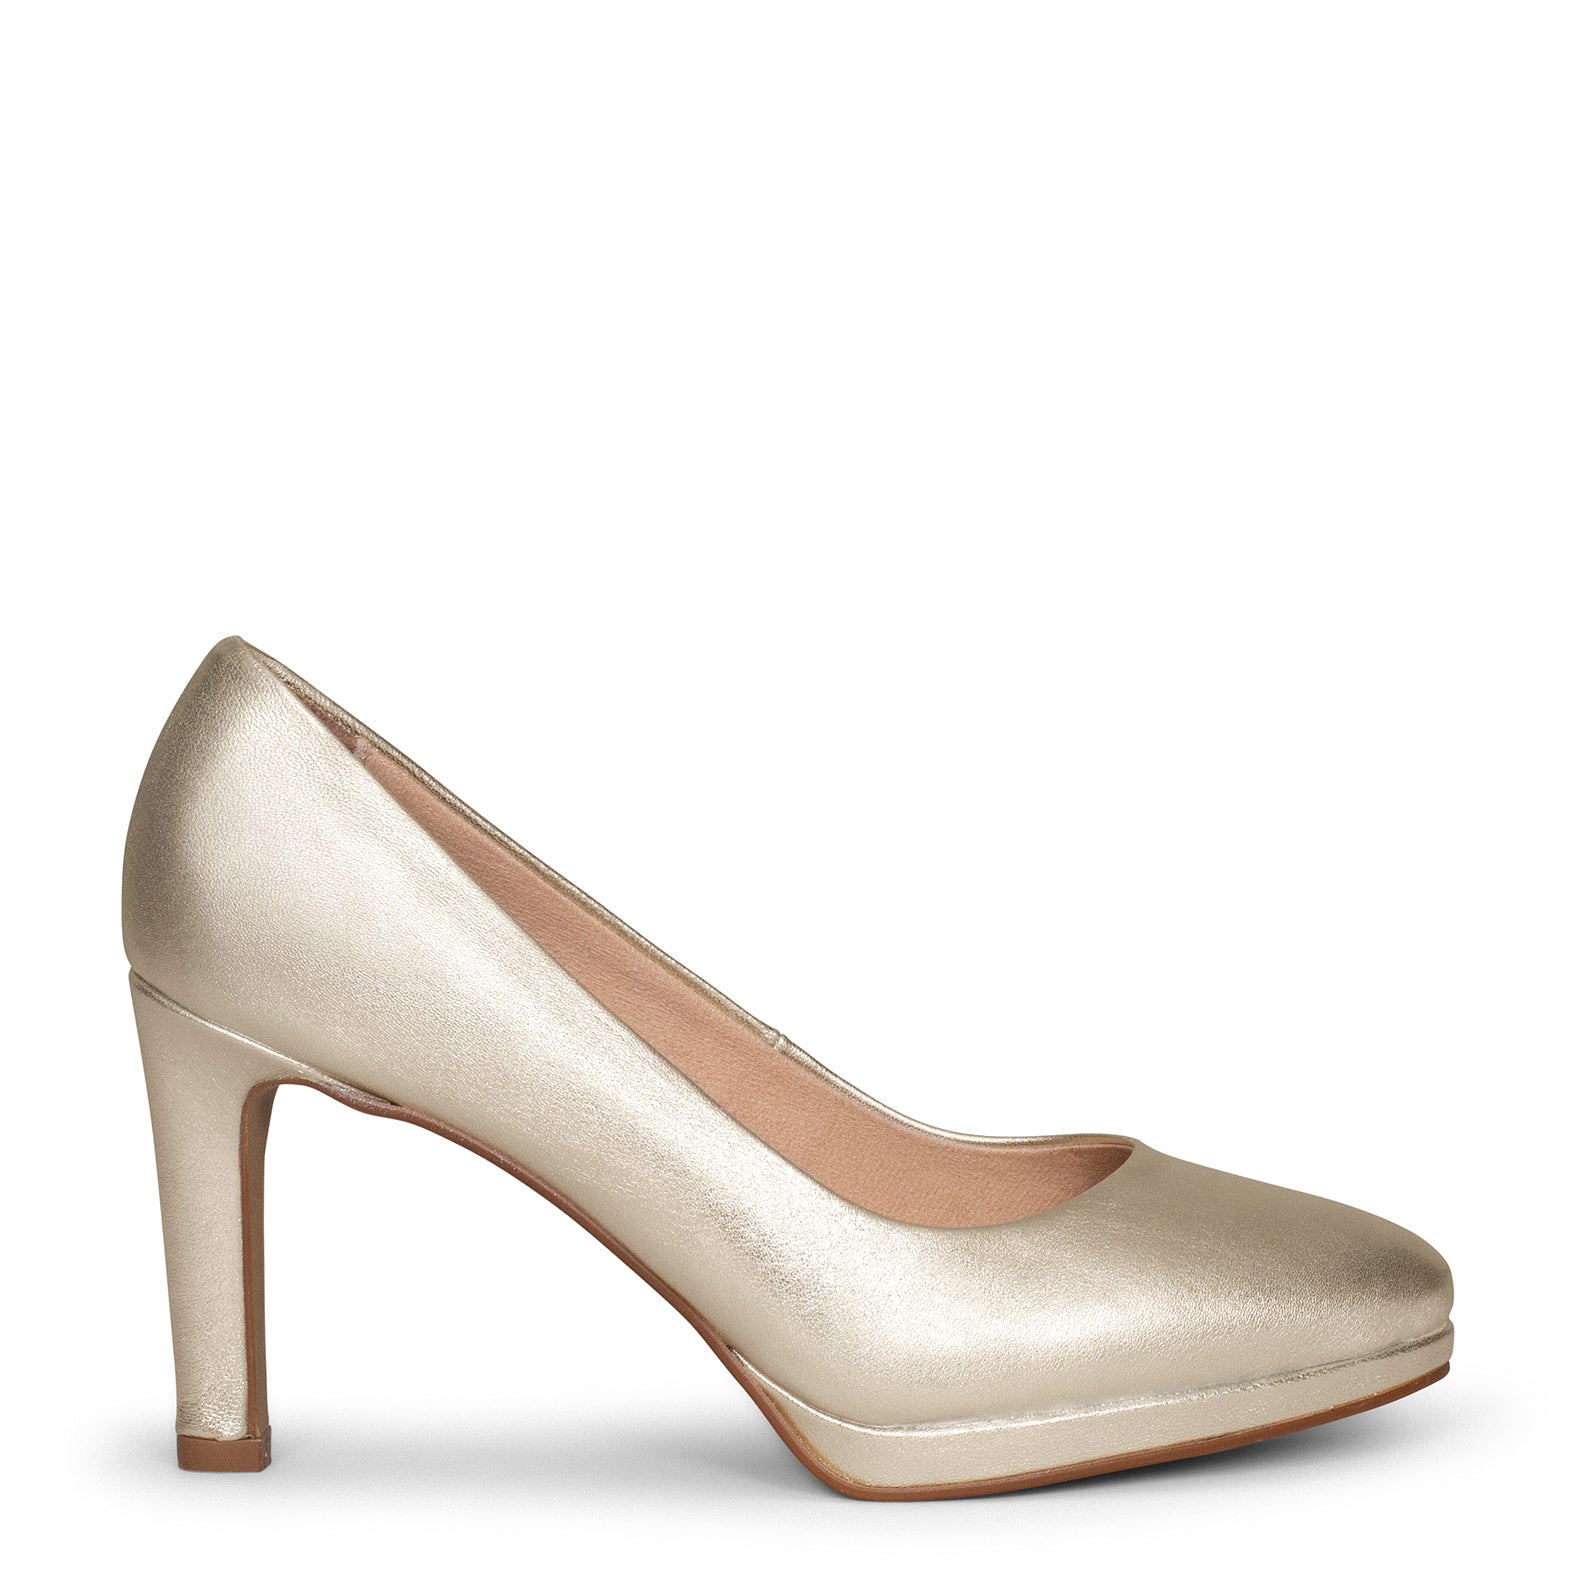 PLATFORM – GOLDEN high heels with platform